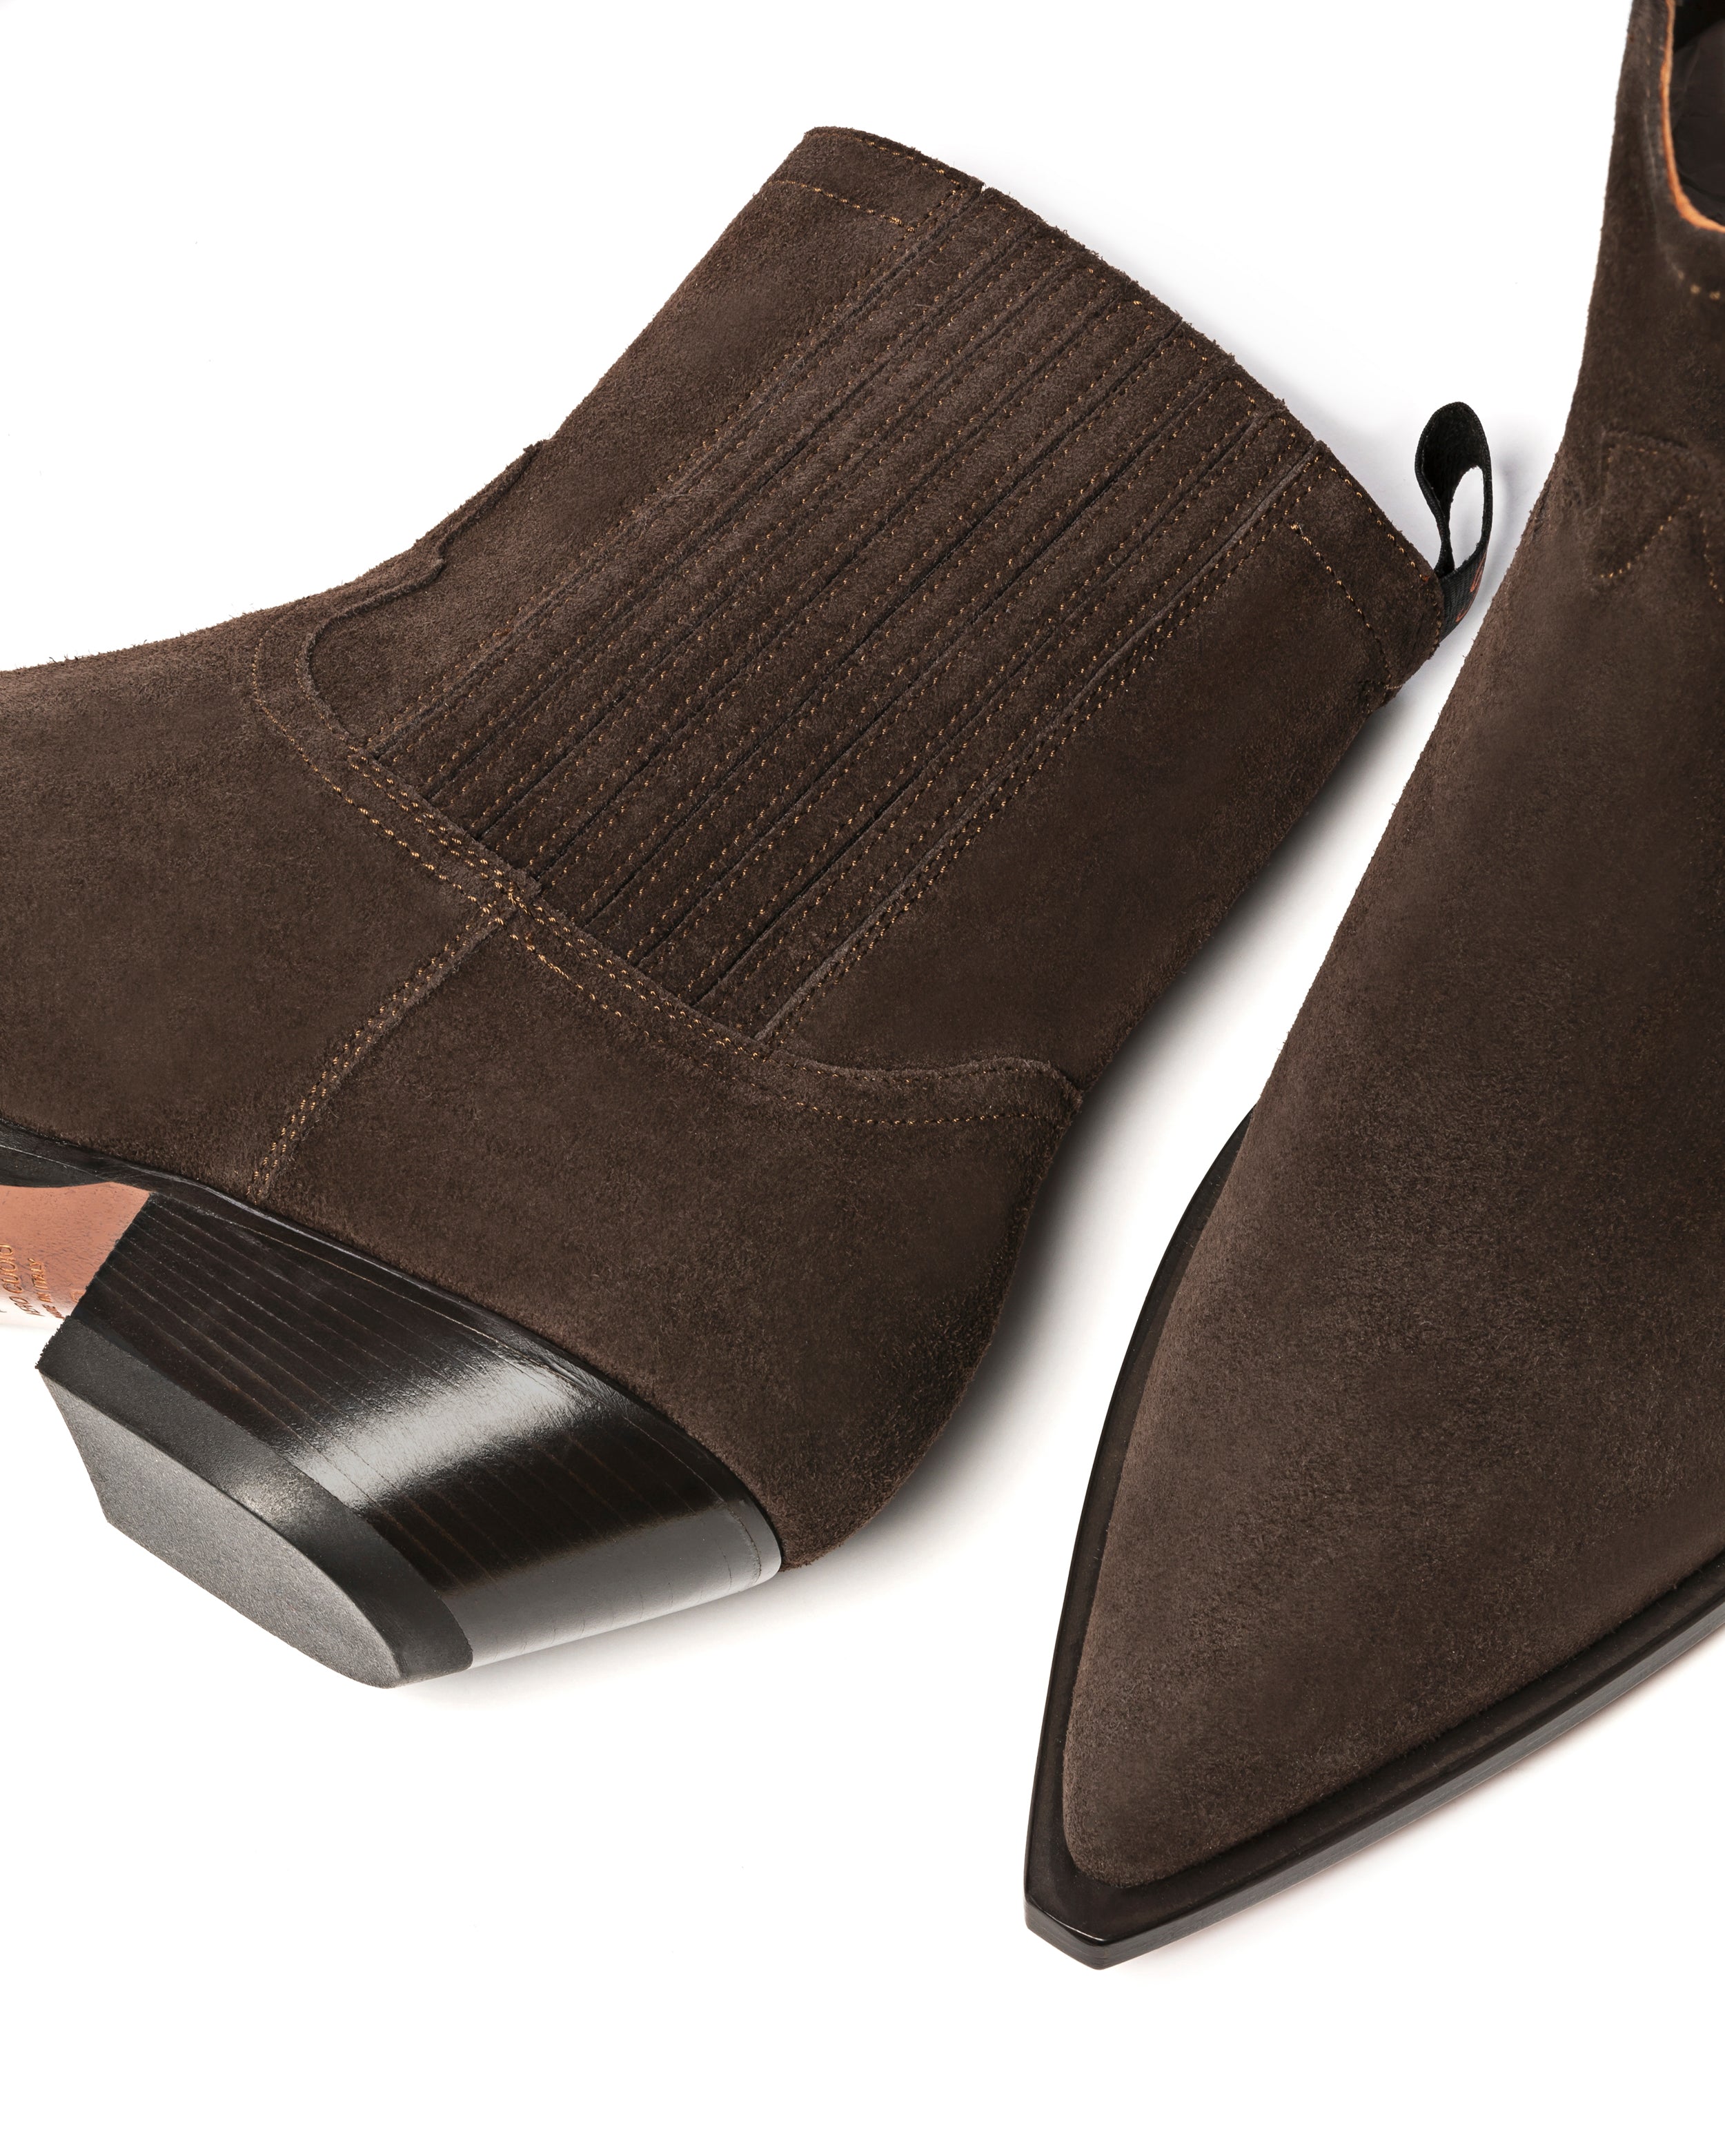 HIDALGO Women's Ankle Boots in Brown Suede